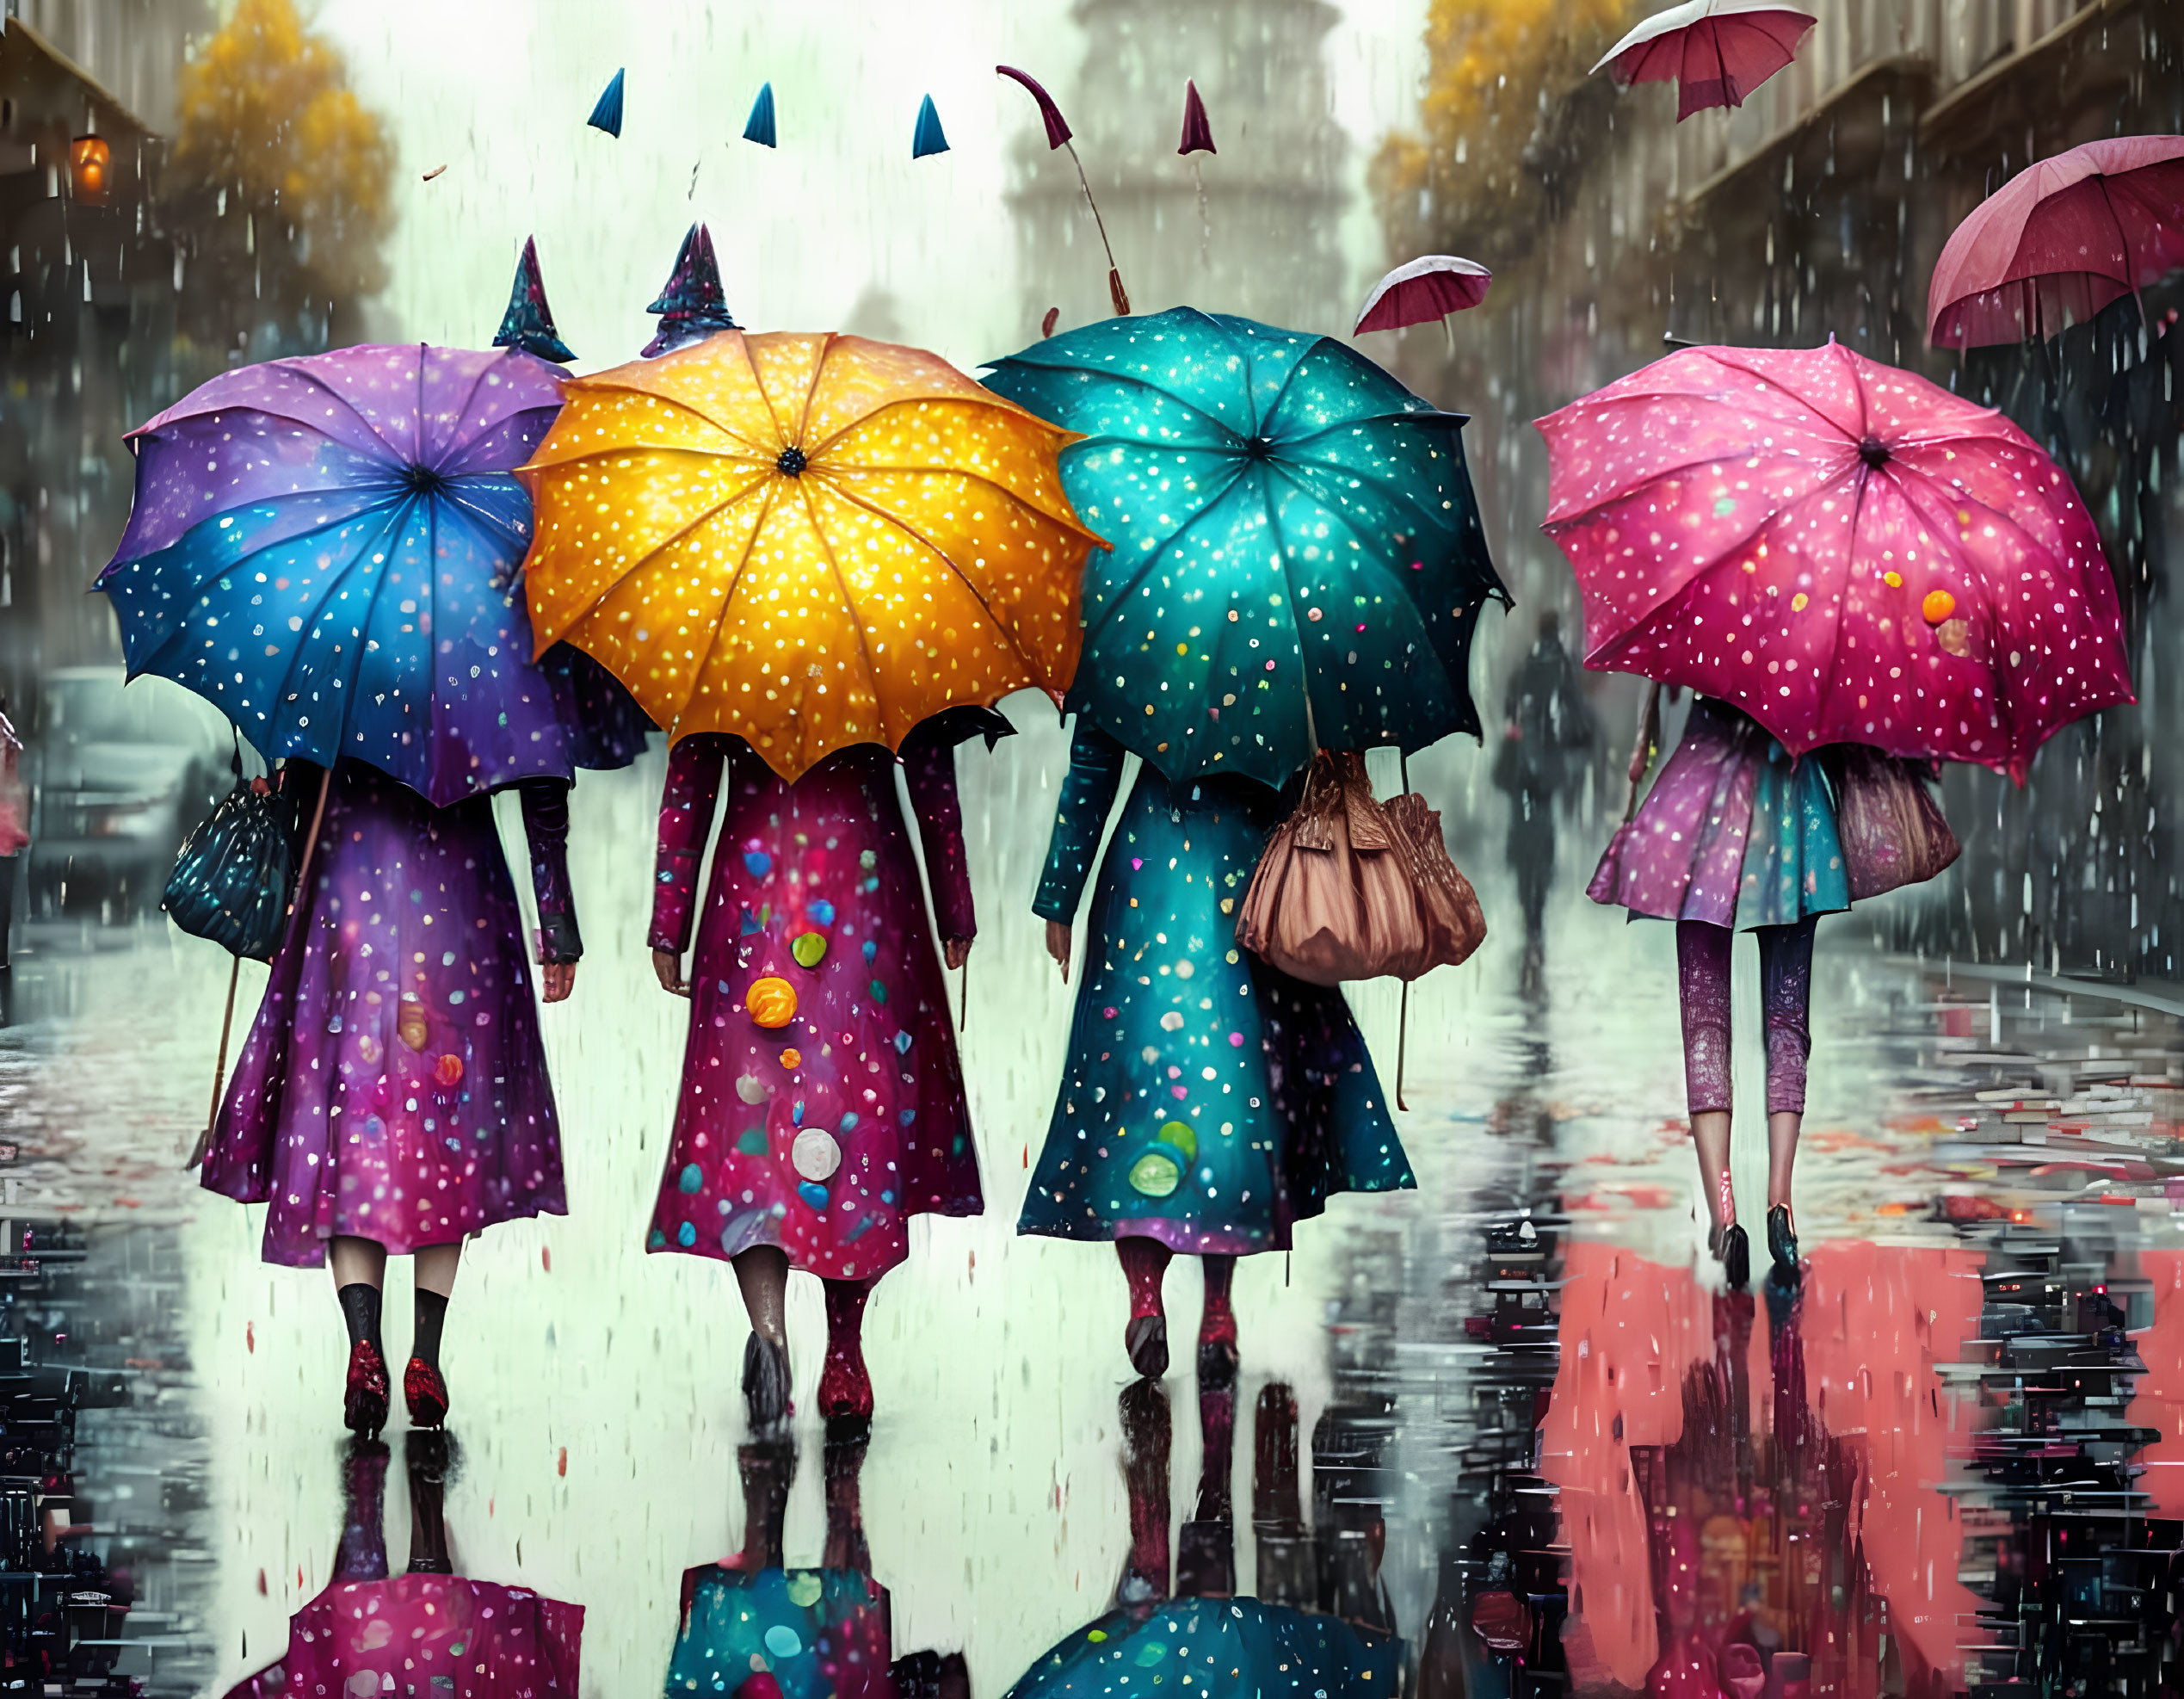 Colorful umbrellas walking on wet street in heavy rain